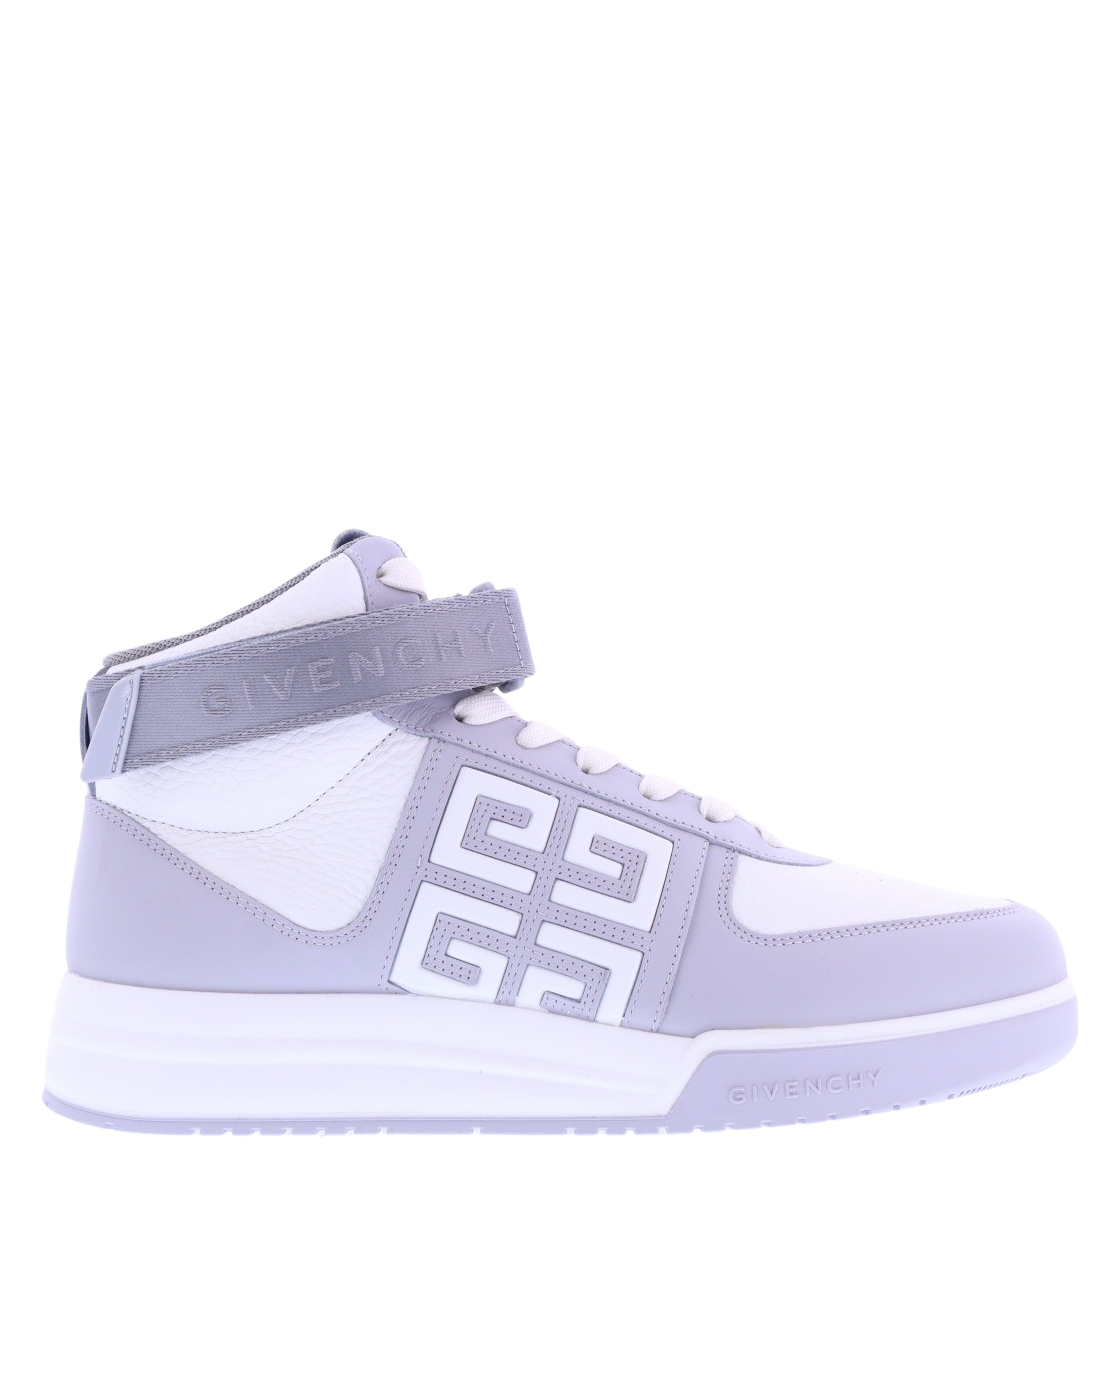 Men G4 High-top sneakers white/gray